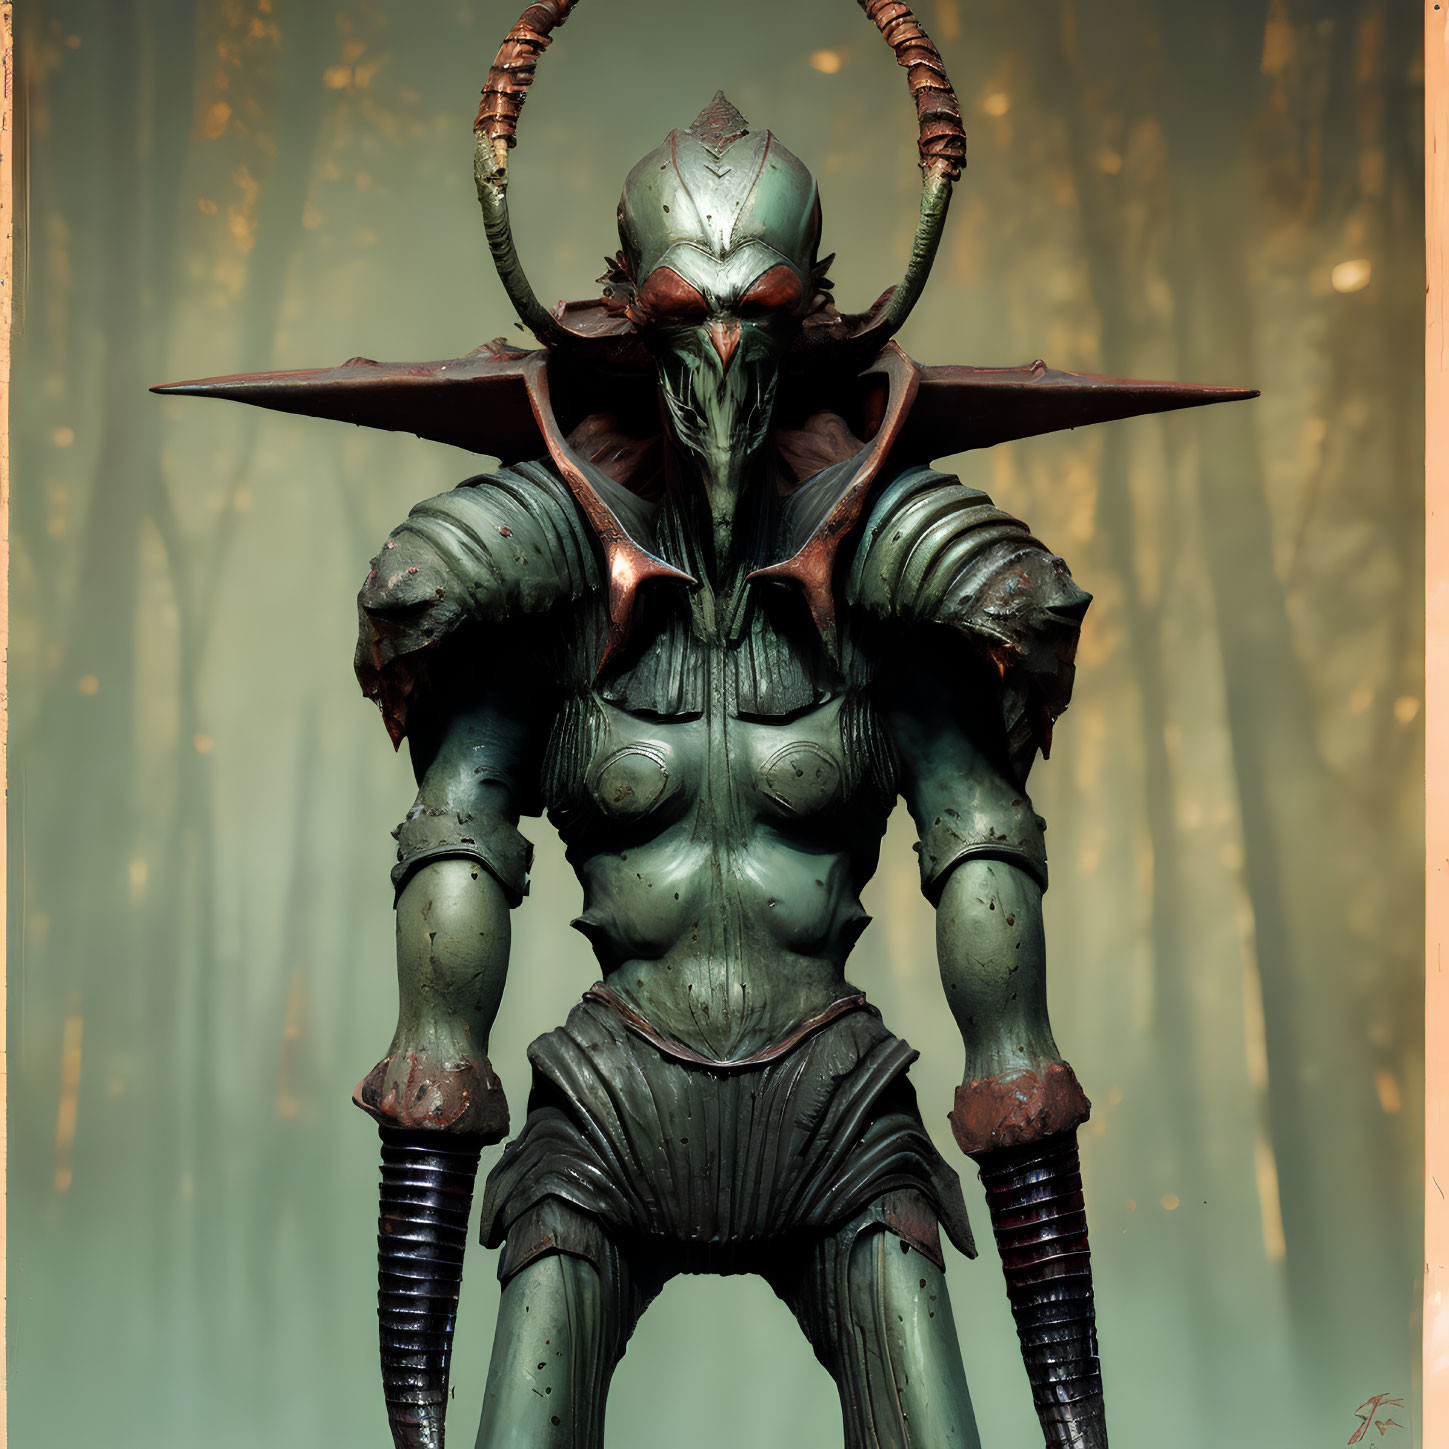 Fantasy warrior in green armor against misty forest backdrop